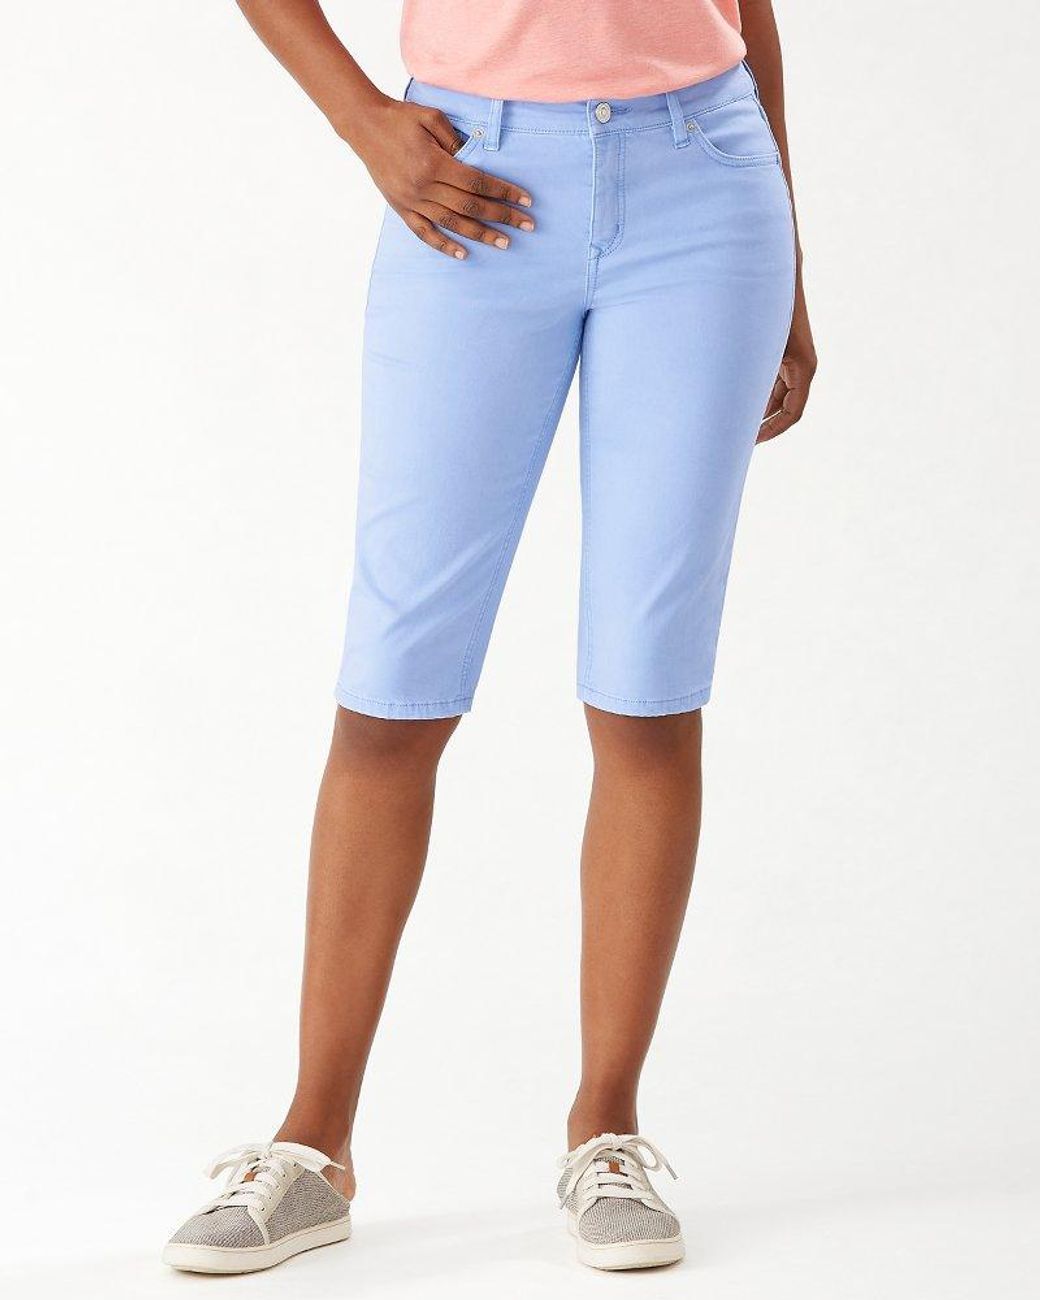 PINNS Ladies/Womens Cotton Bermuda Shorts